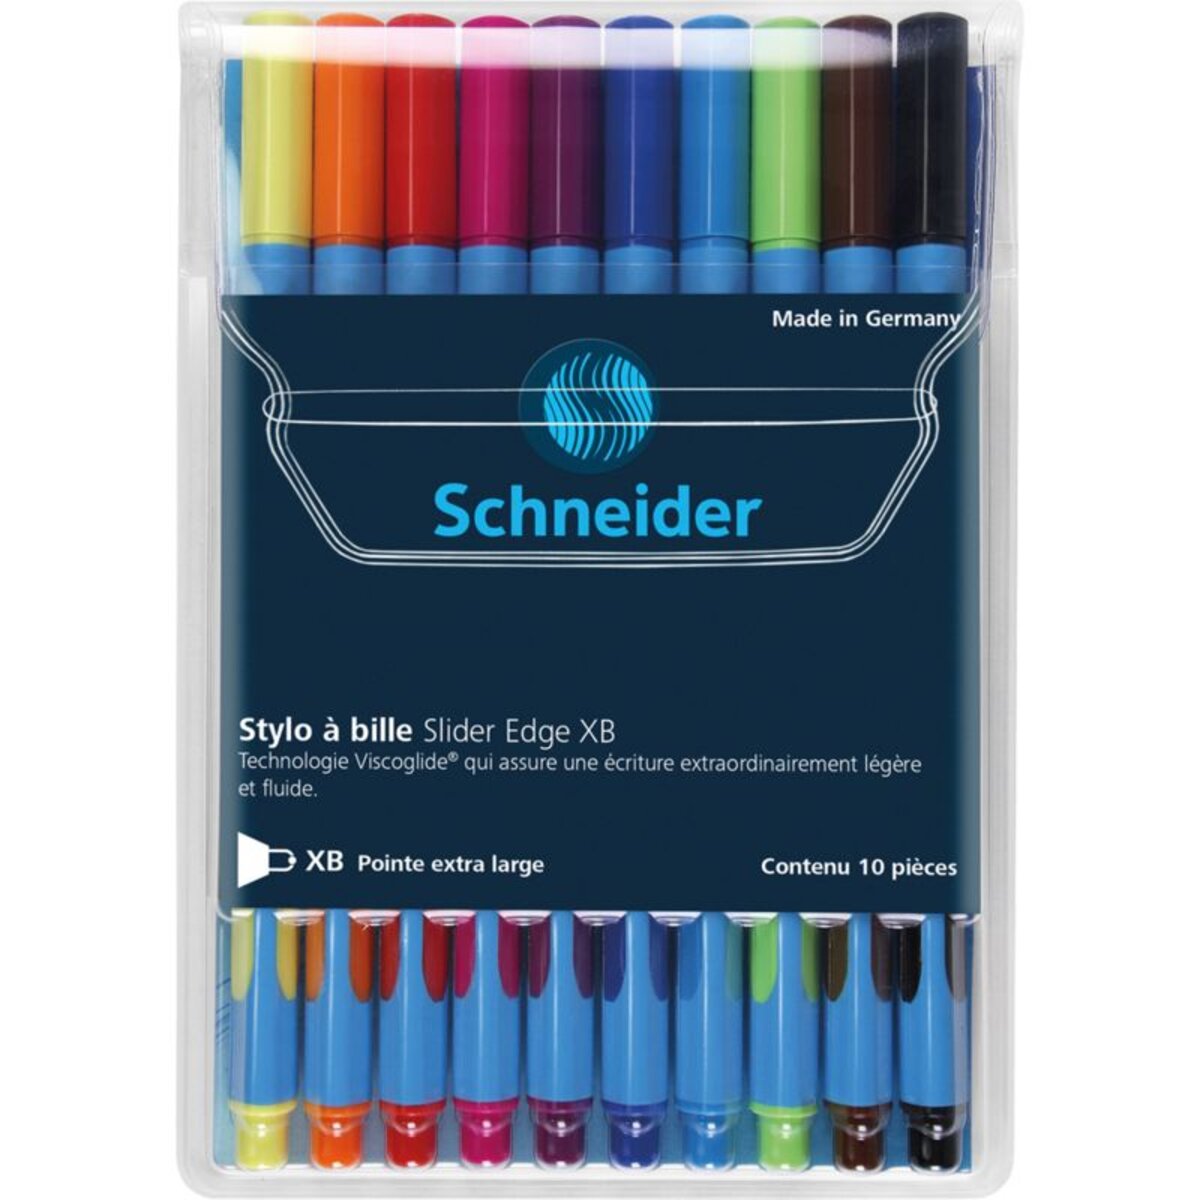 Pochette de 10 stylos à bille Slider Edge Pte Extra Large, Multicolore  SCHNEIDER - La Poste